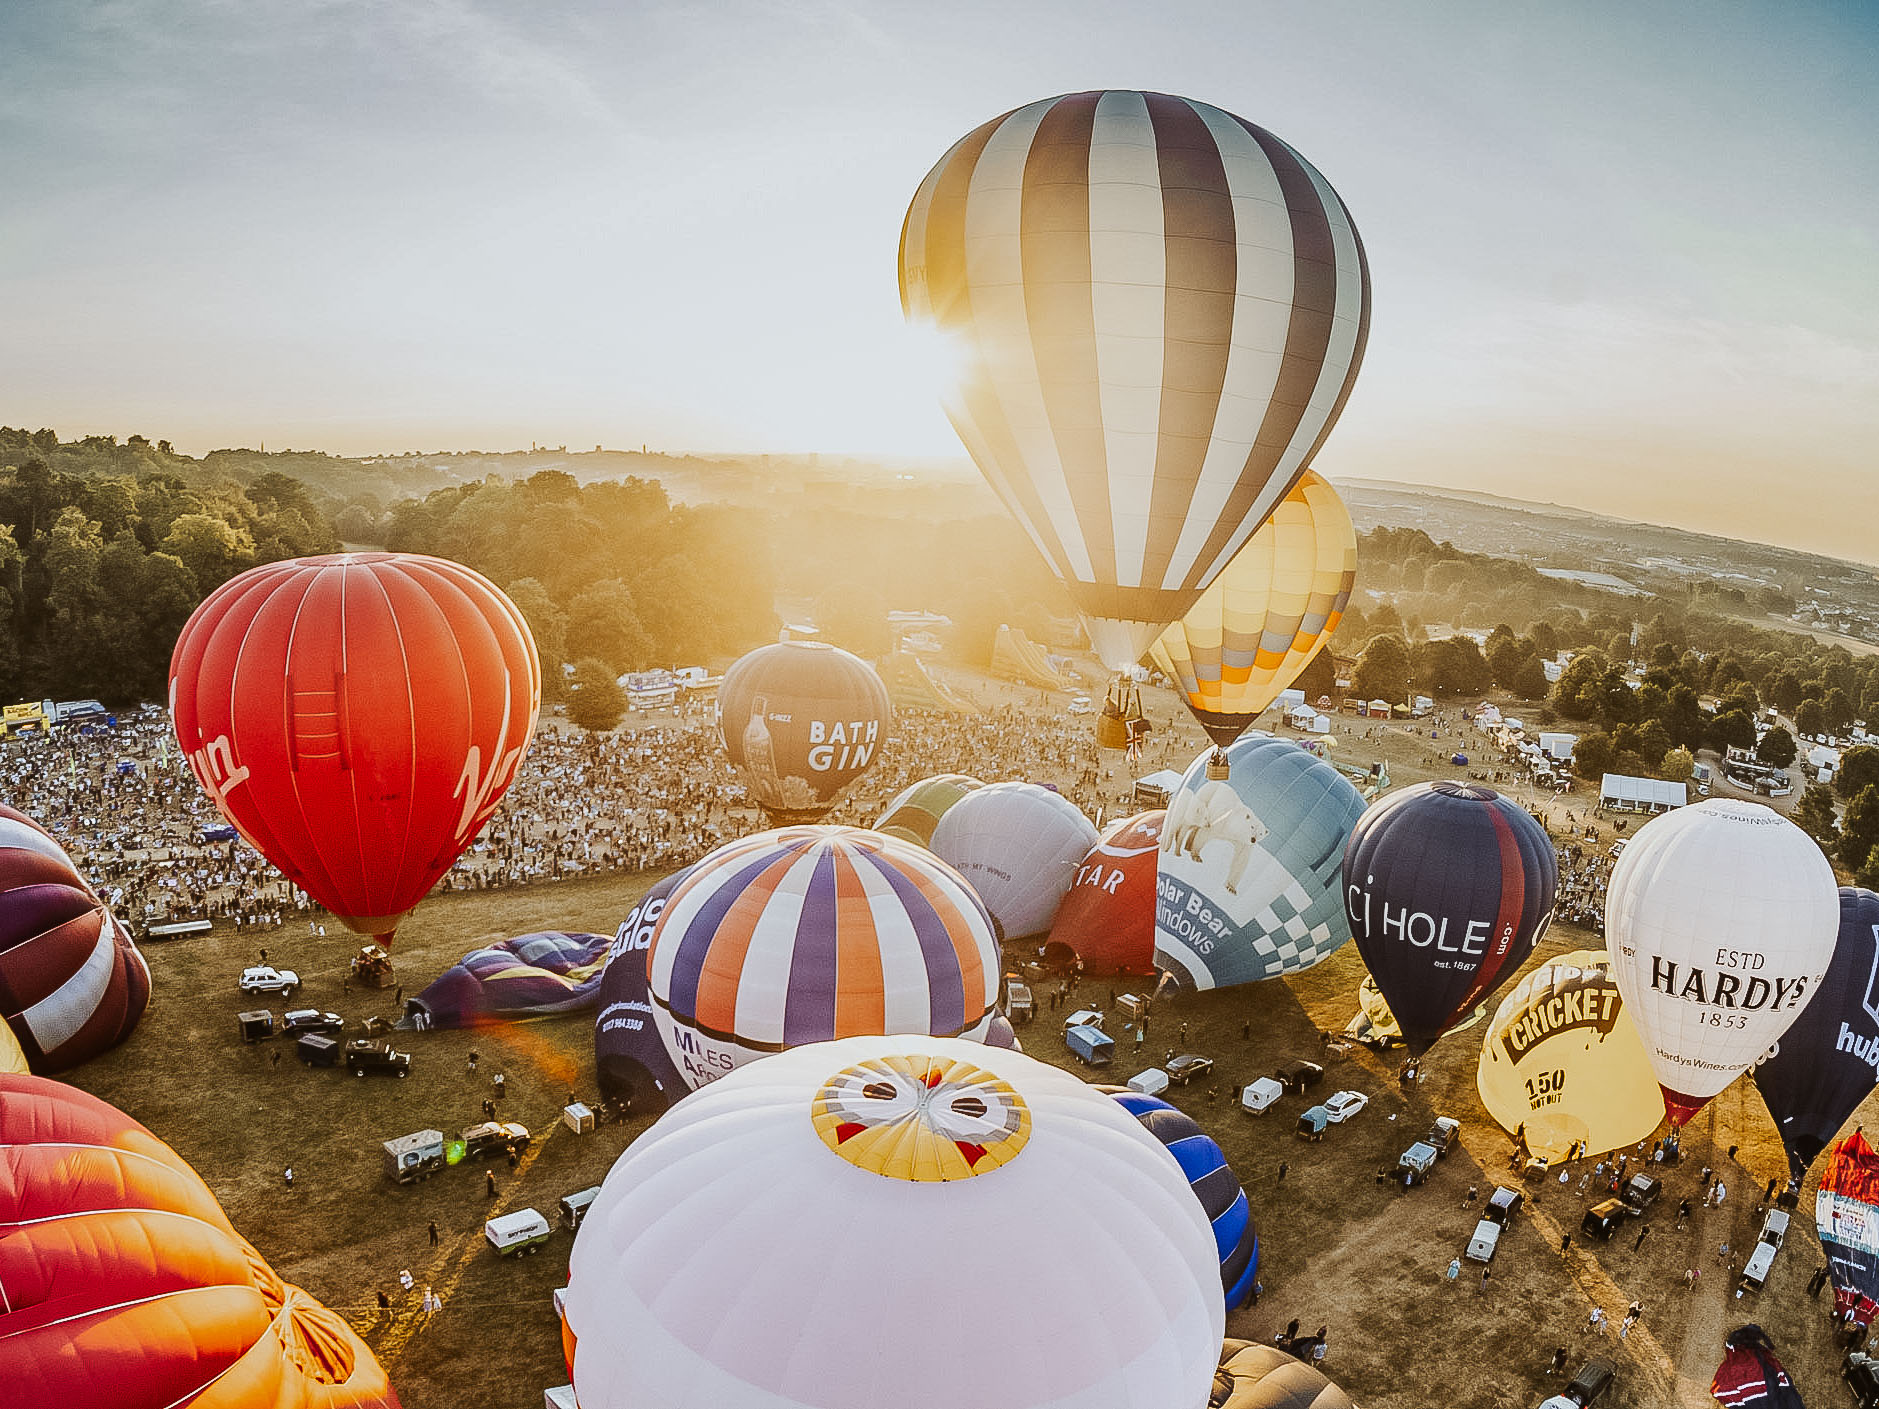 A collection of hot air balloons at the Bristol Balloon Fiesta